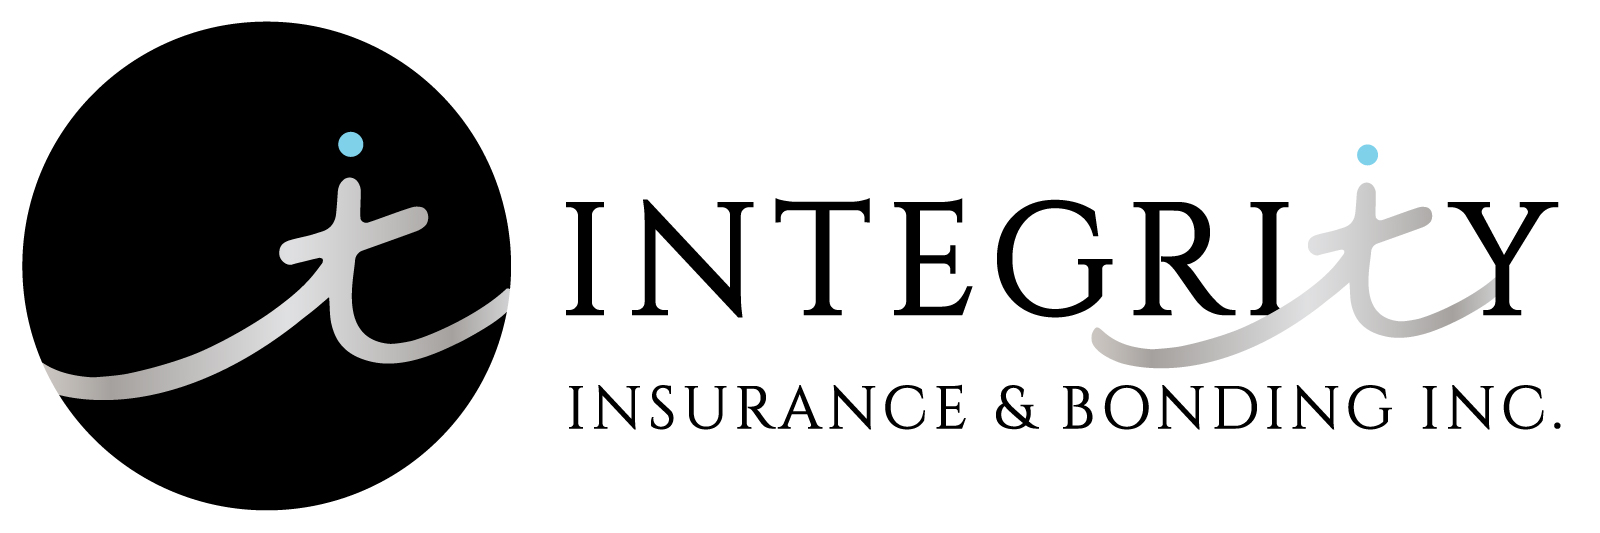 Integrity Insurance & Bonding Inc - Logo